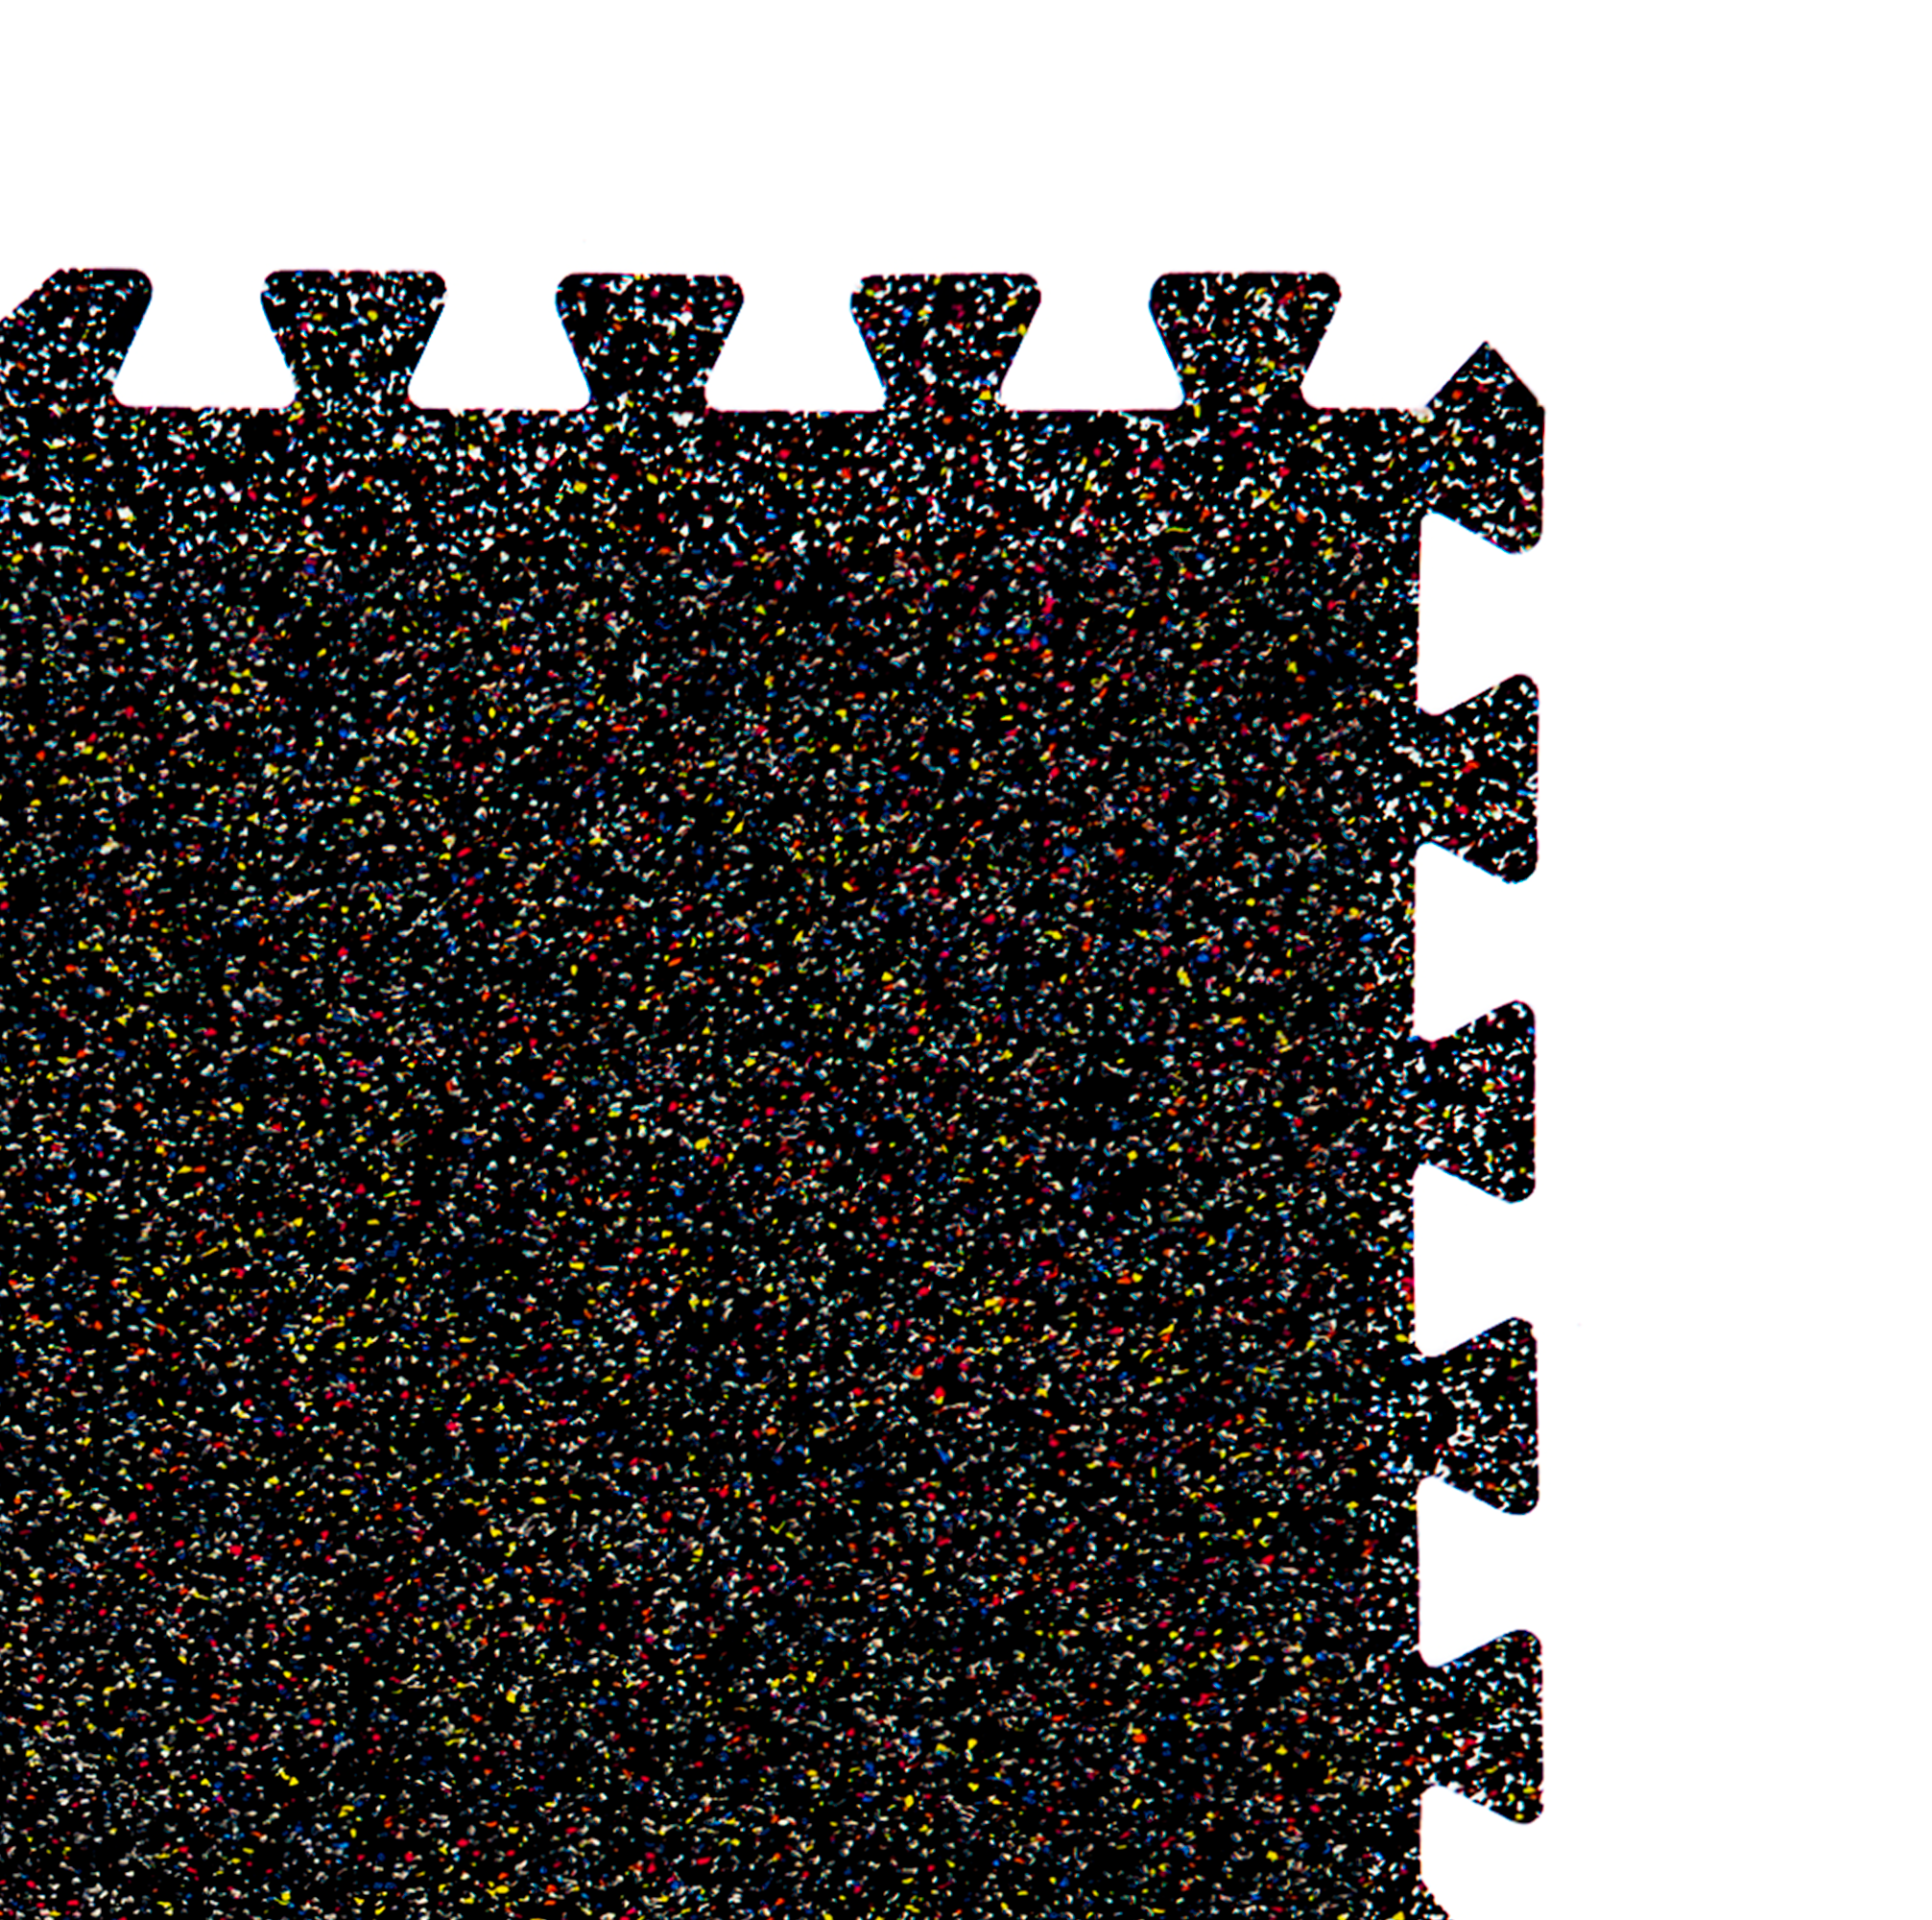 Bodega multiuso tipo baúl para exterior color negro/gris 109cm *51cm *55cm